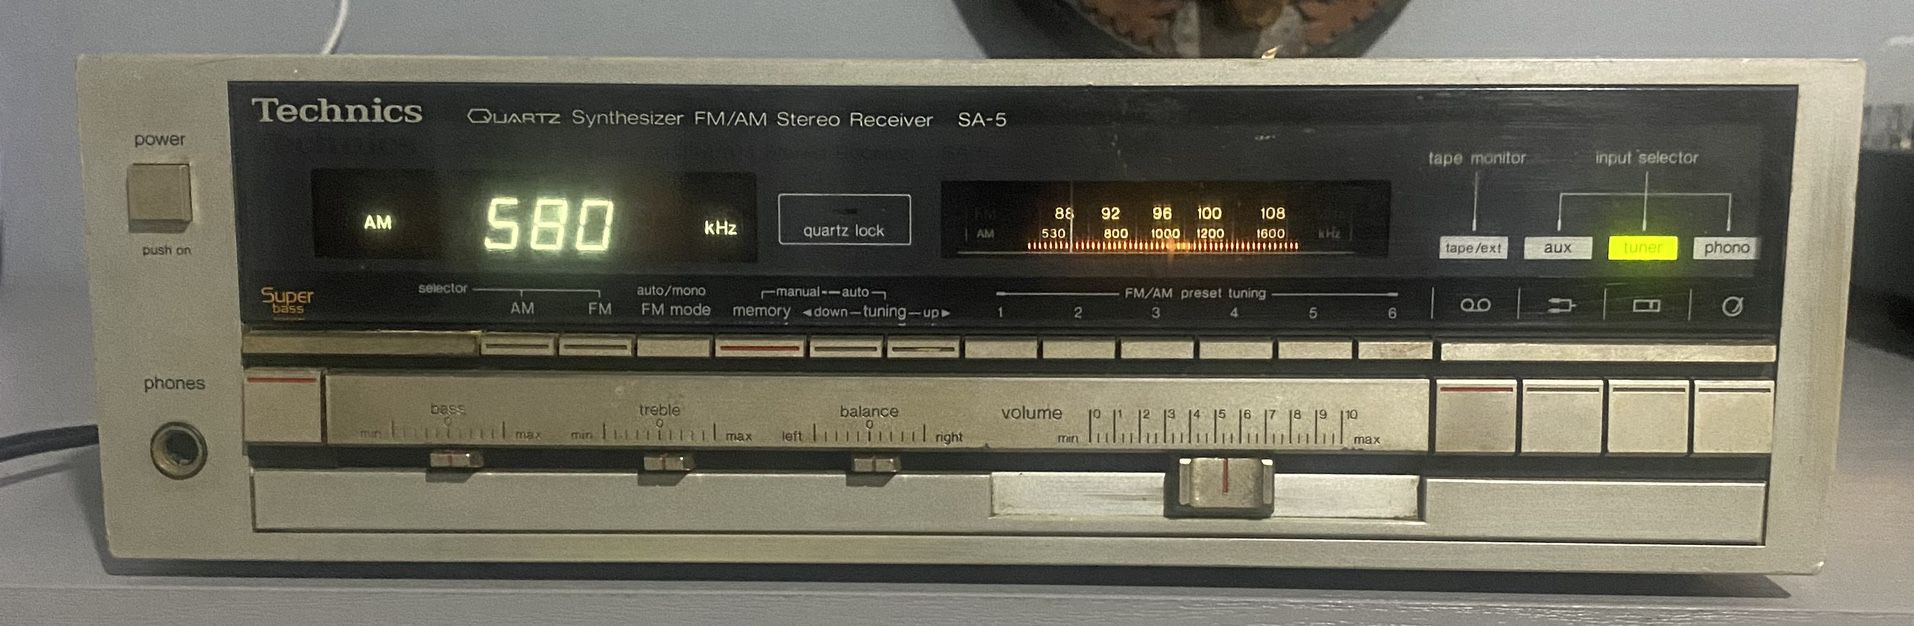 Technics FM/AM Stereo Receiver Model No. SA-5